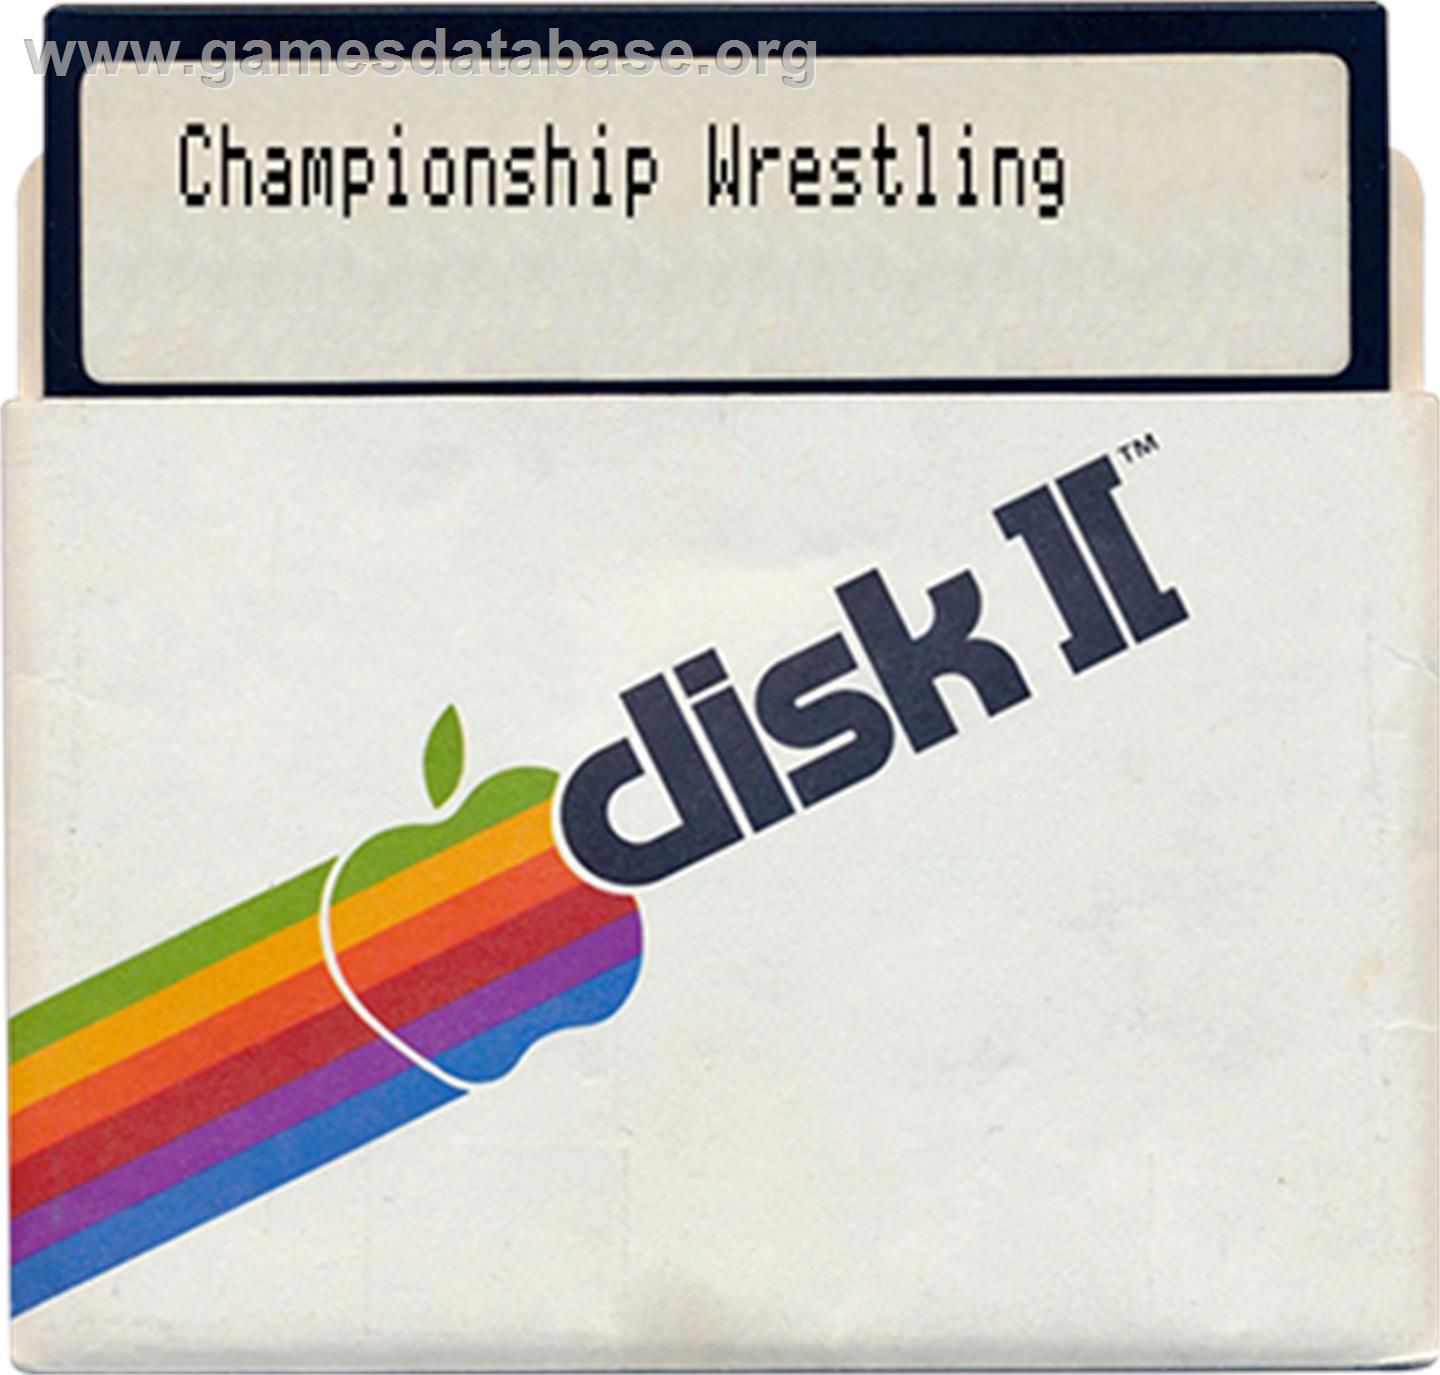 Championship Wrestling - Apple II - Artwork - Disc